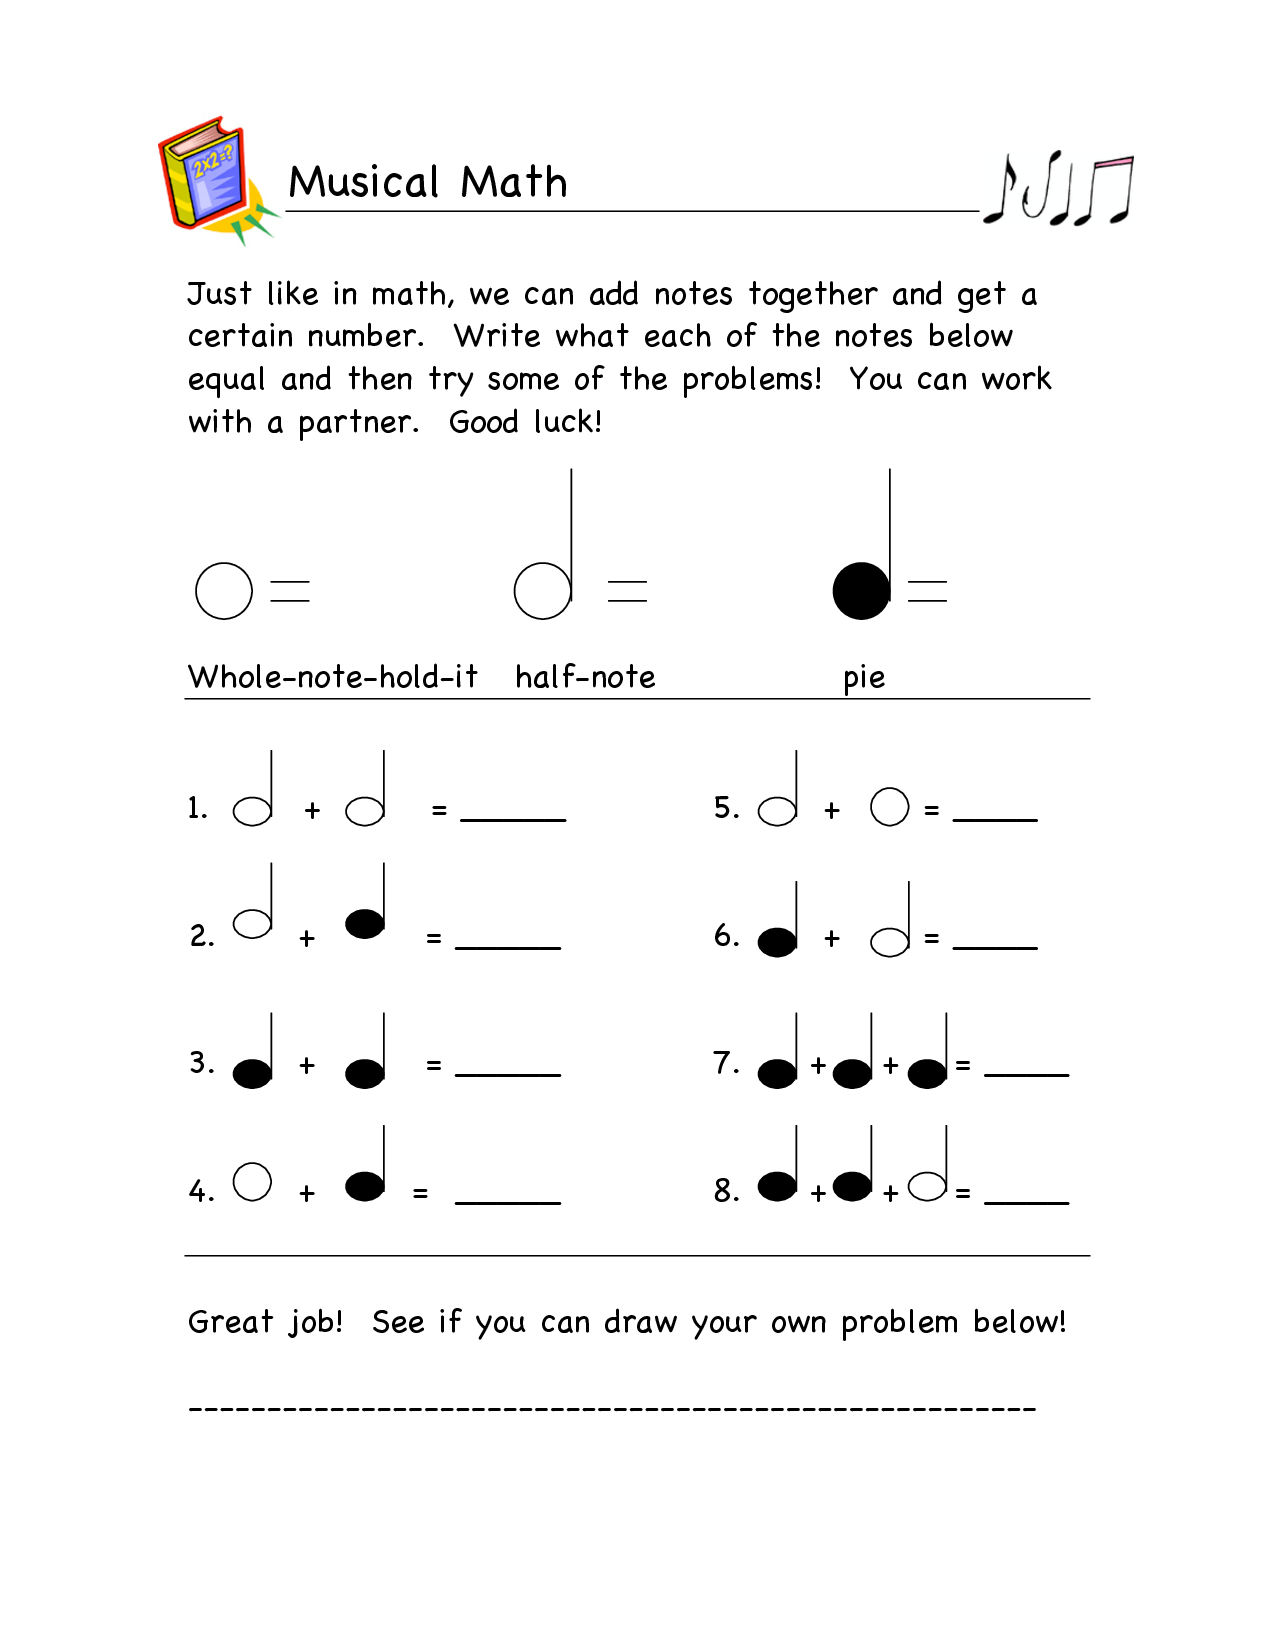 worksheet-music-math-answers